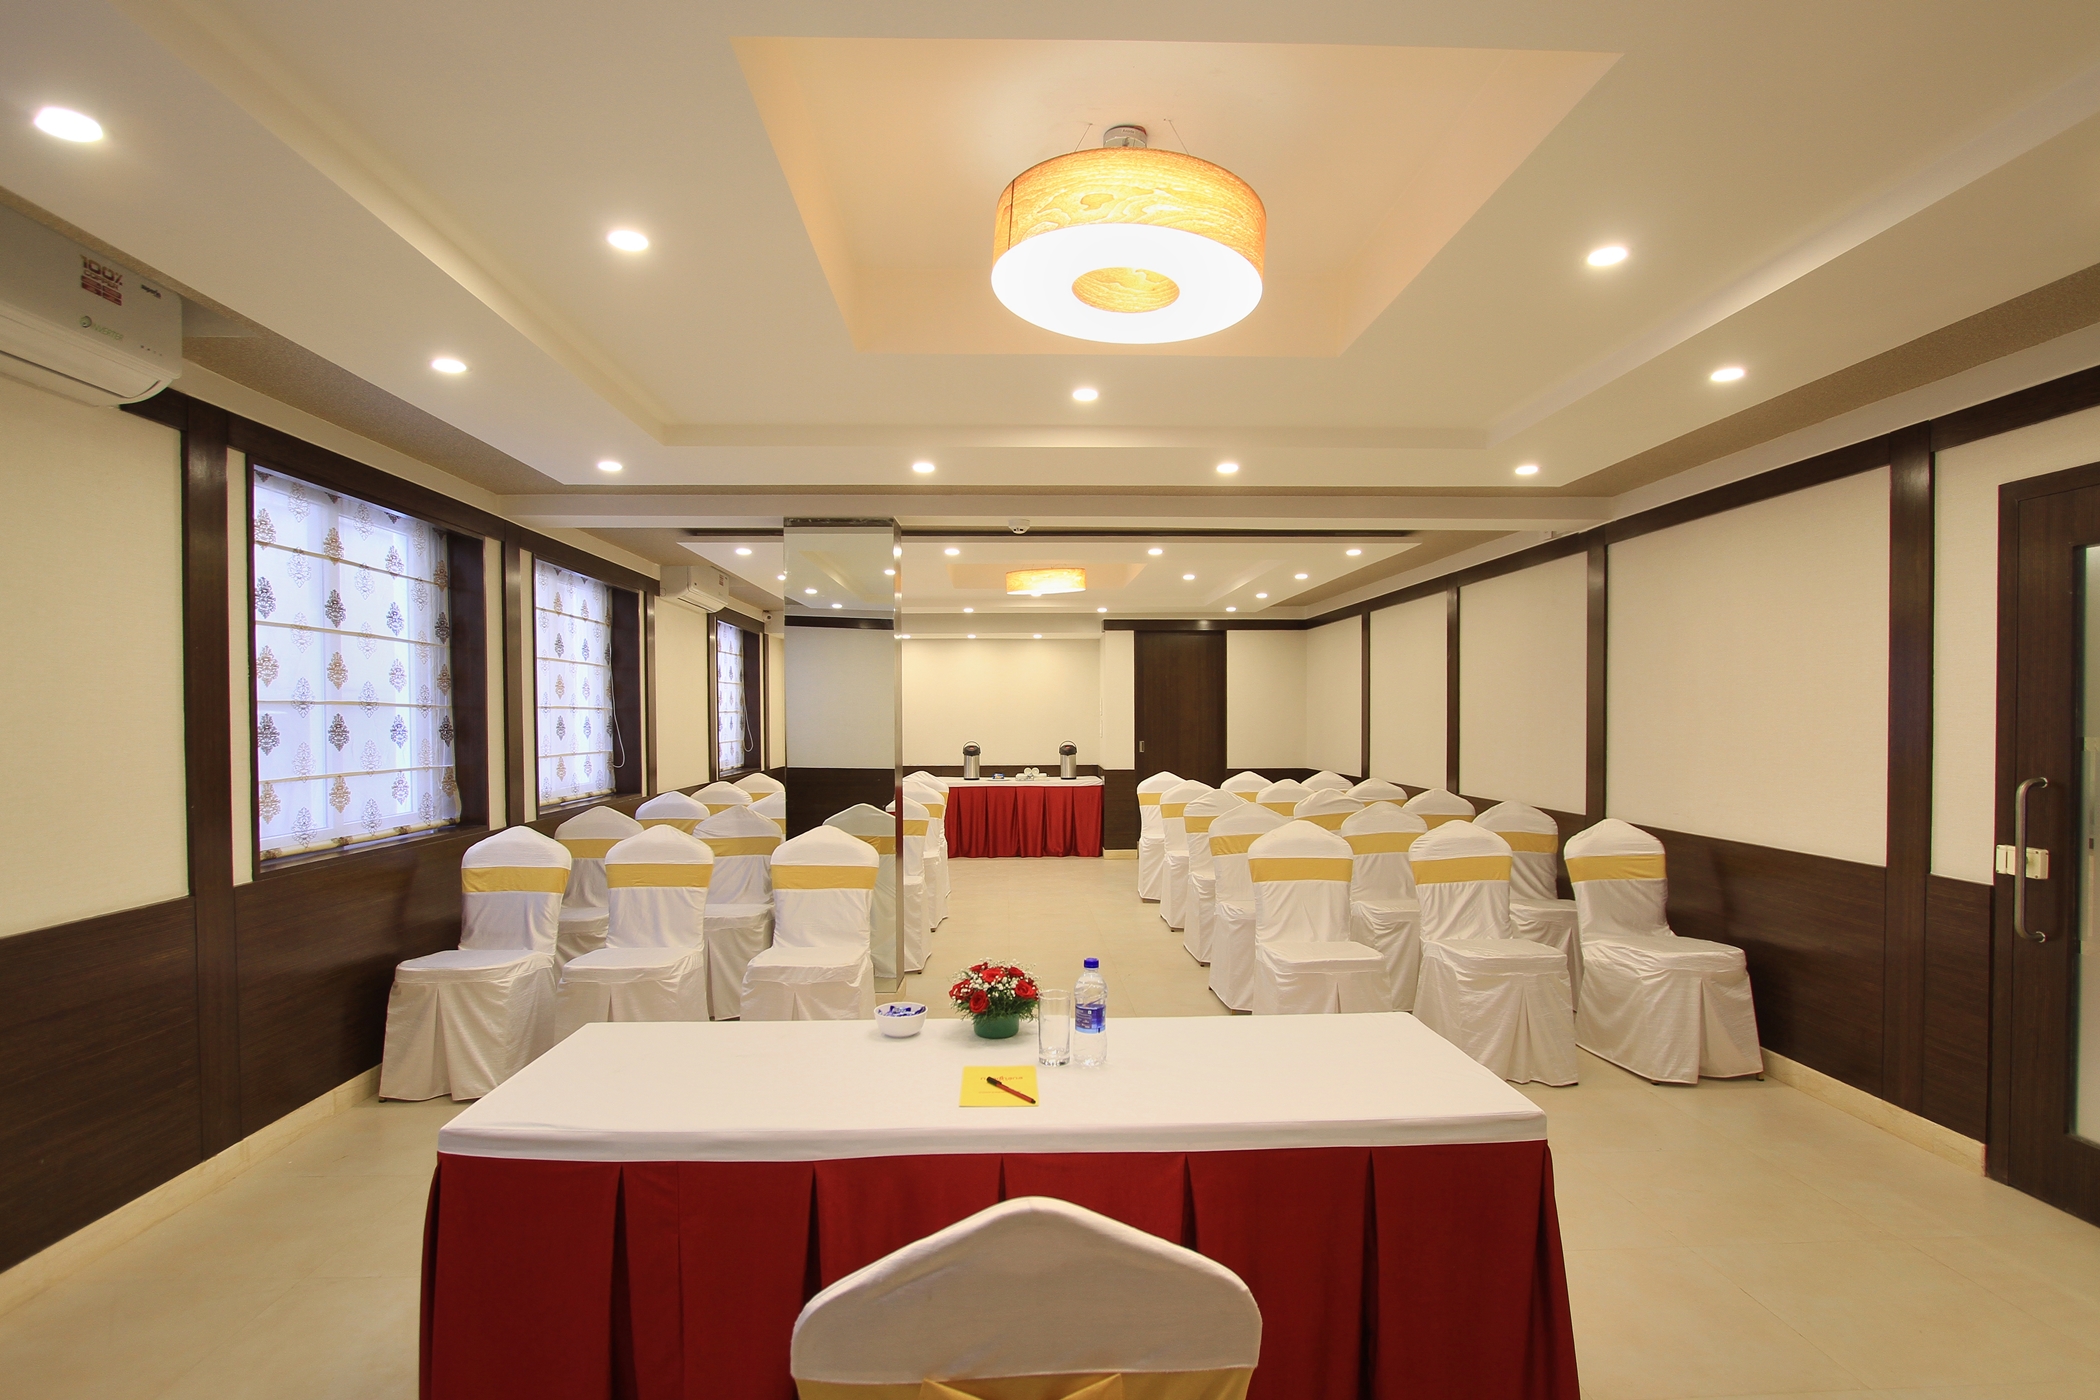 SENATE HALL, banquet halls in bangalore, La Sara Regent Hotel, Koramangala 1 3